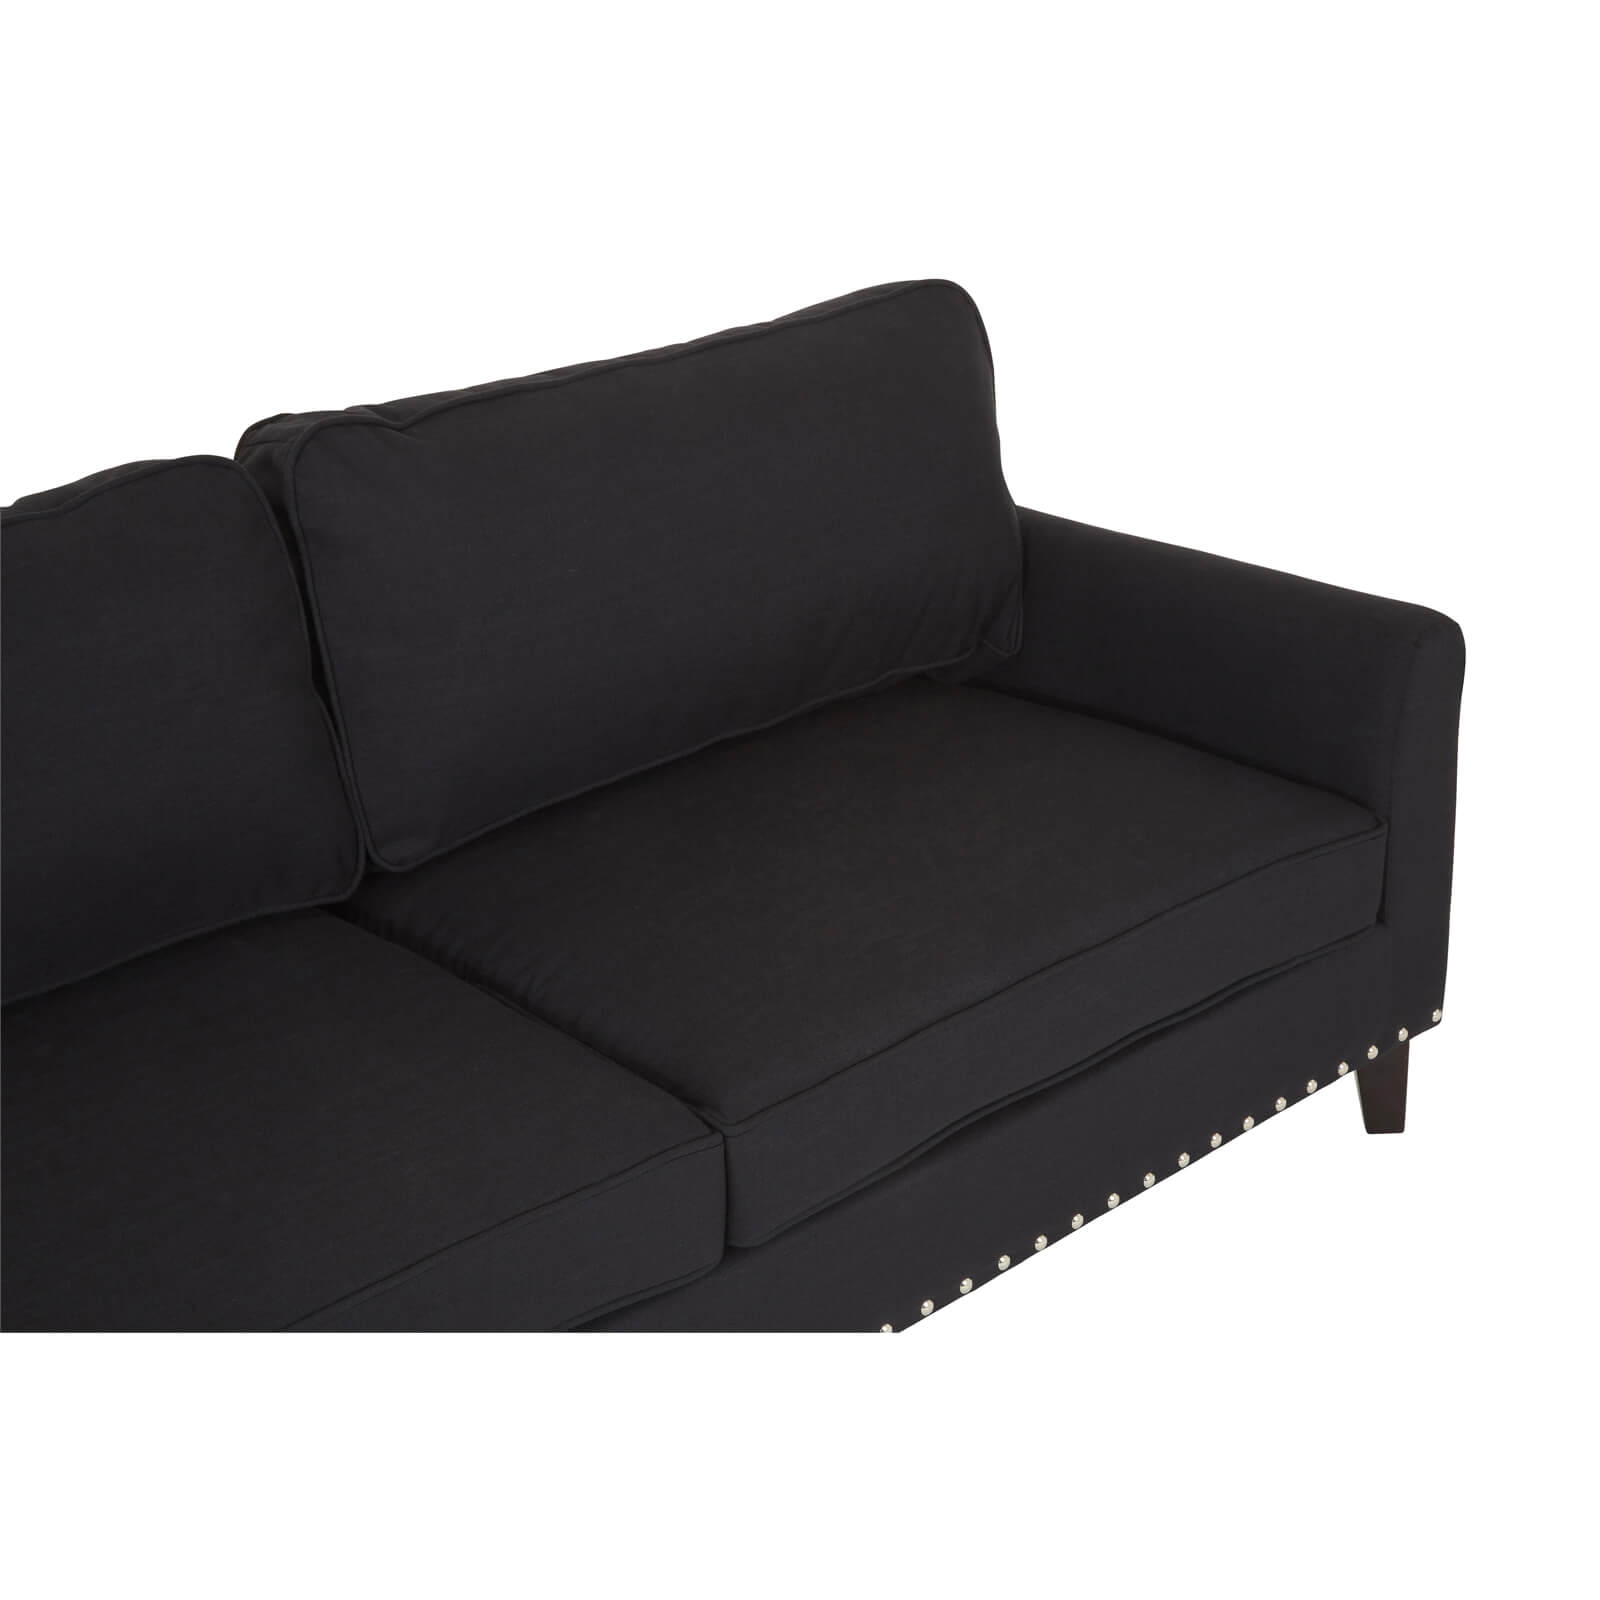 Regents Park 3 Seat Sofa - Black